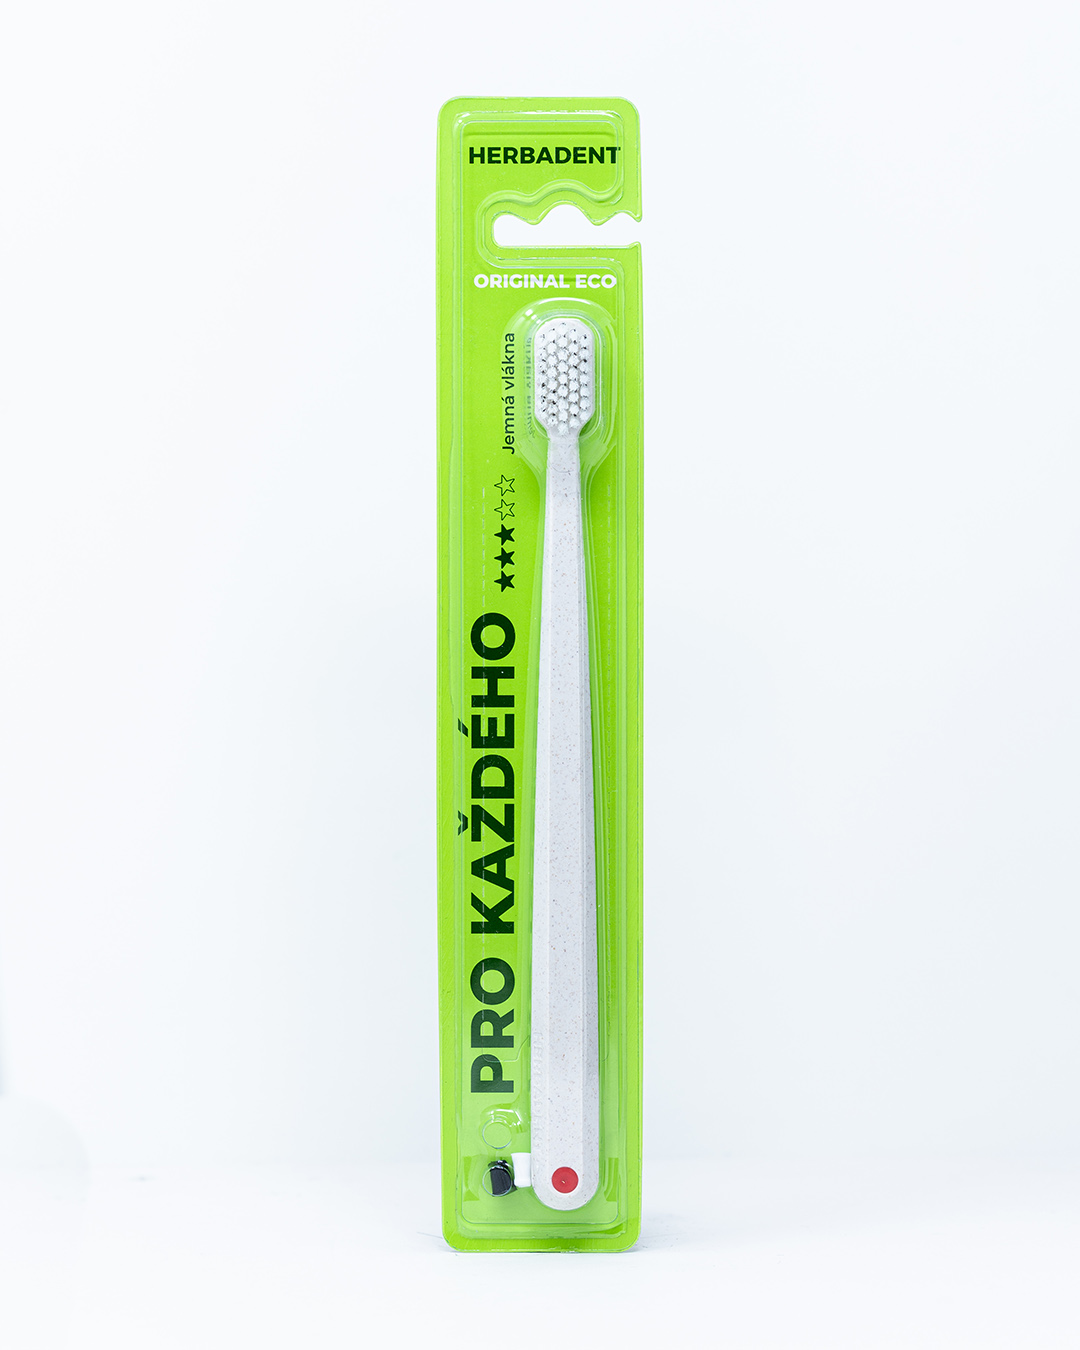 Herbadent Spazzolino Original Eco - Soft